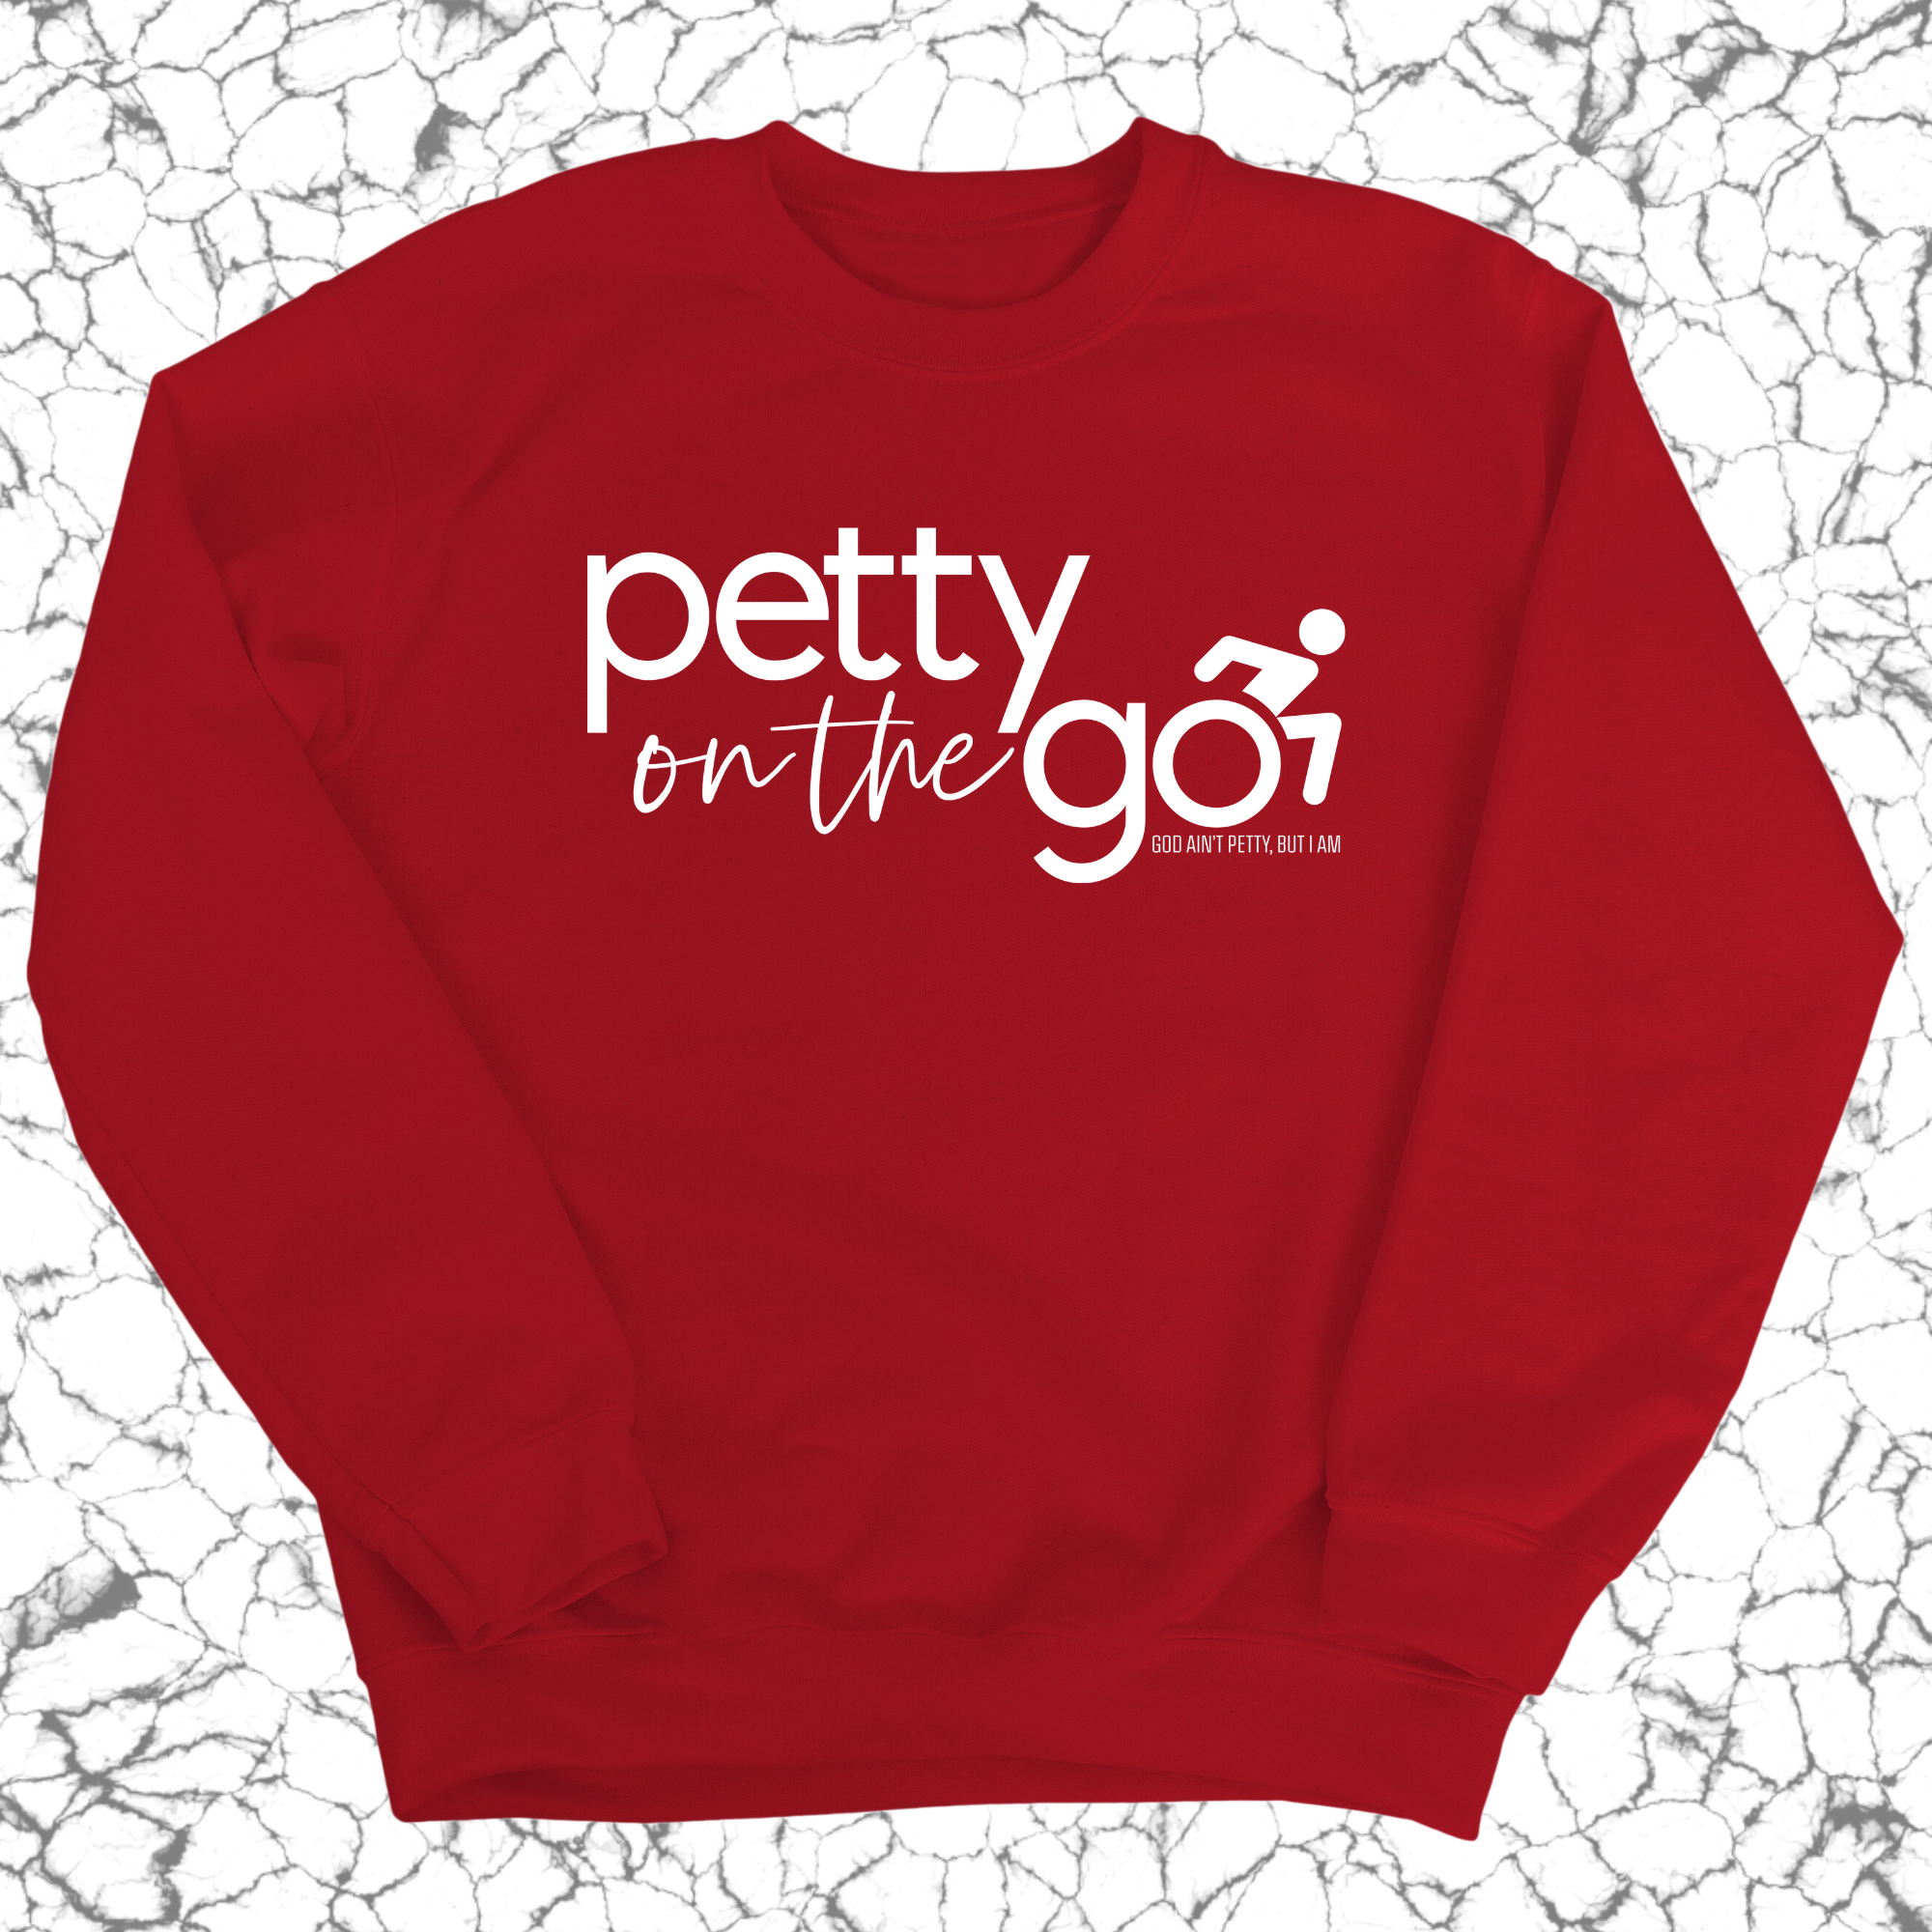 Petty on the Go Unisex Sweatshirt-Sweatshirt-The Original God Ain't Petty But I Am